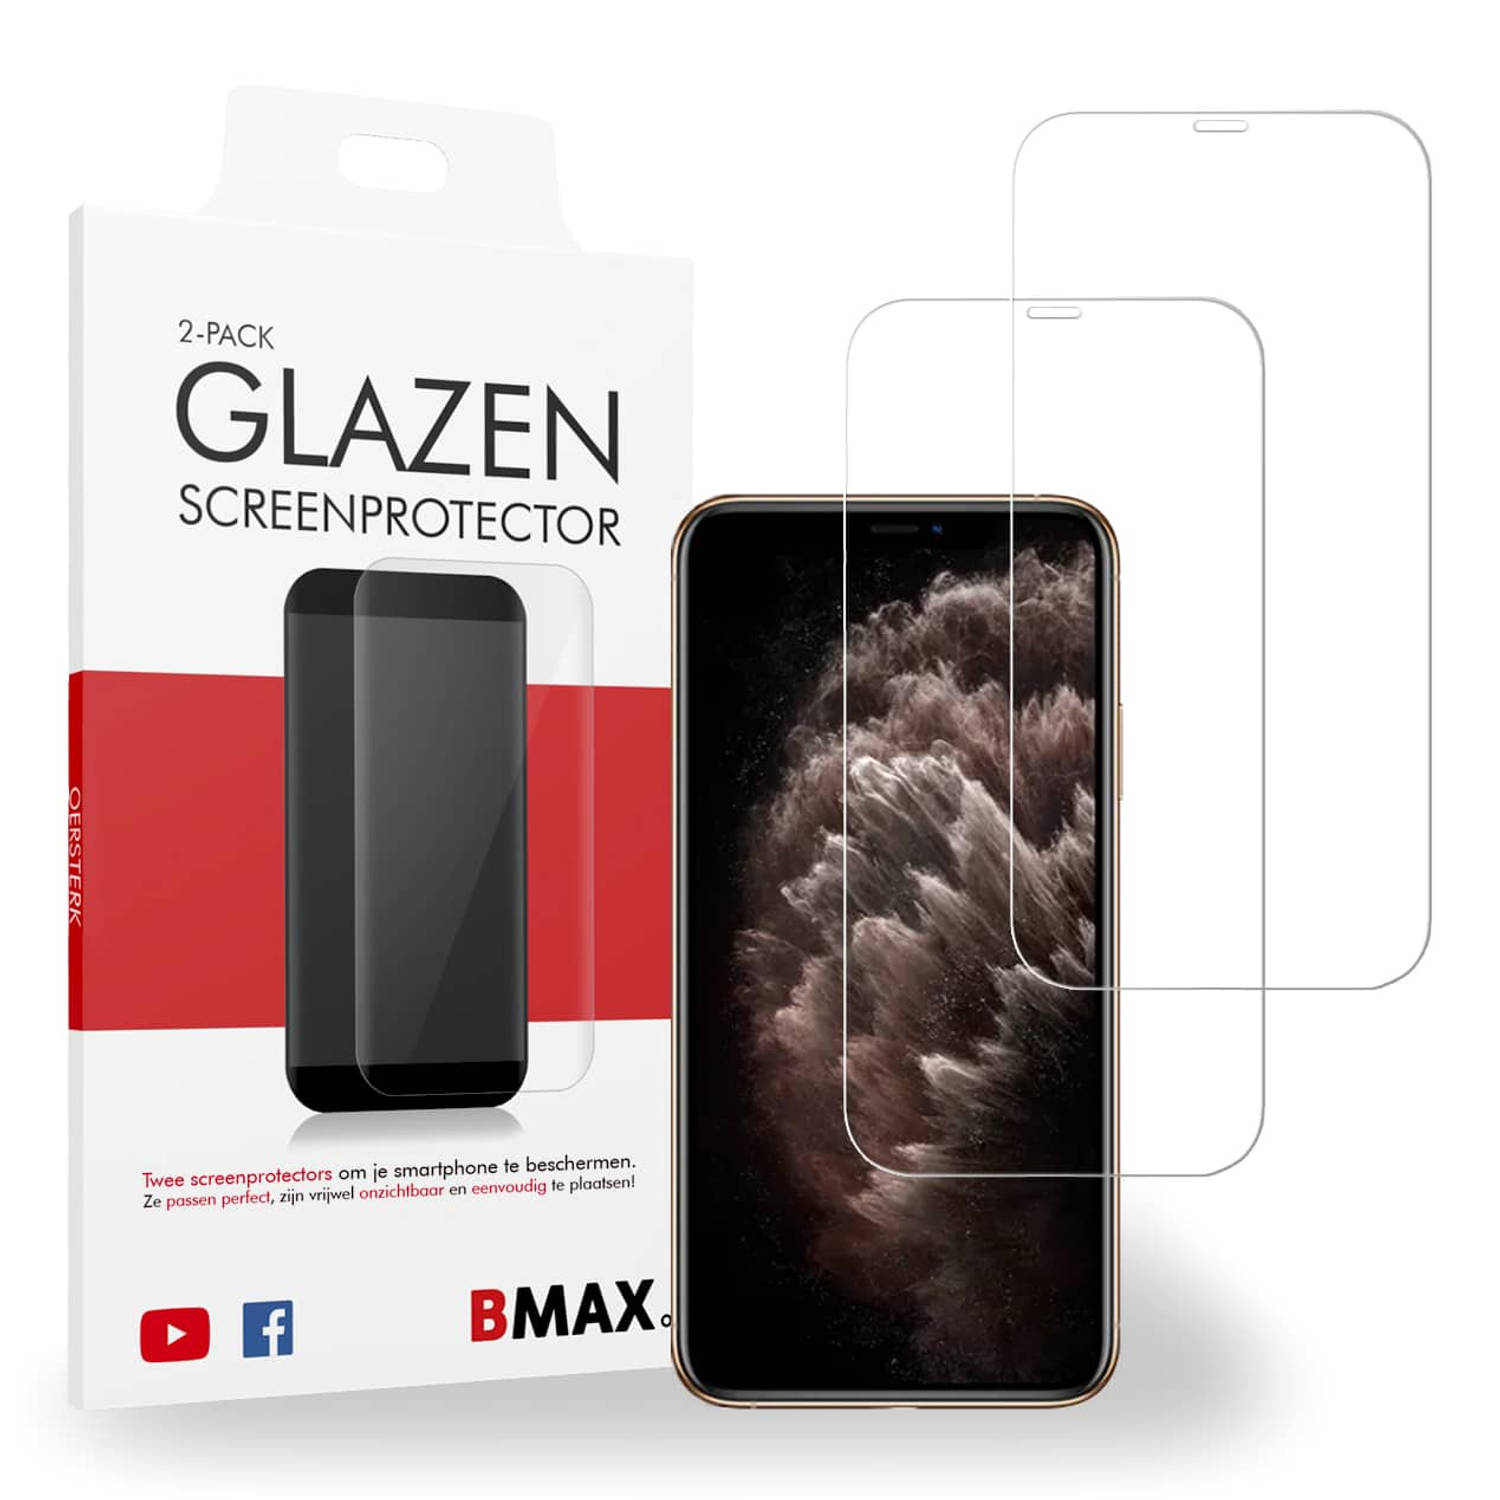 2-pack BMAX Apple iPhone 11 Pro Max Screenprotector - Glass - 2.5D